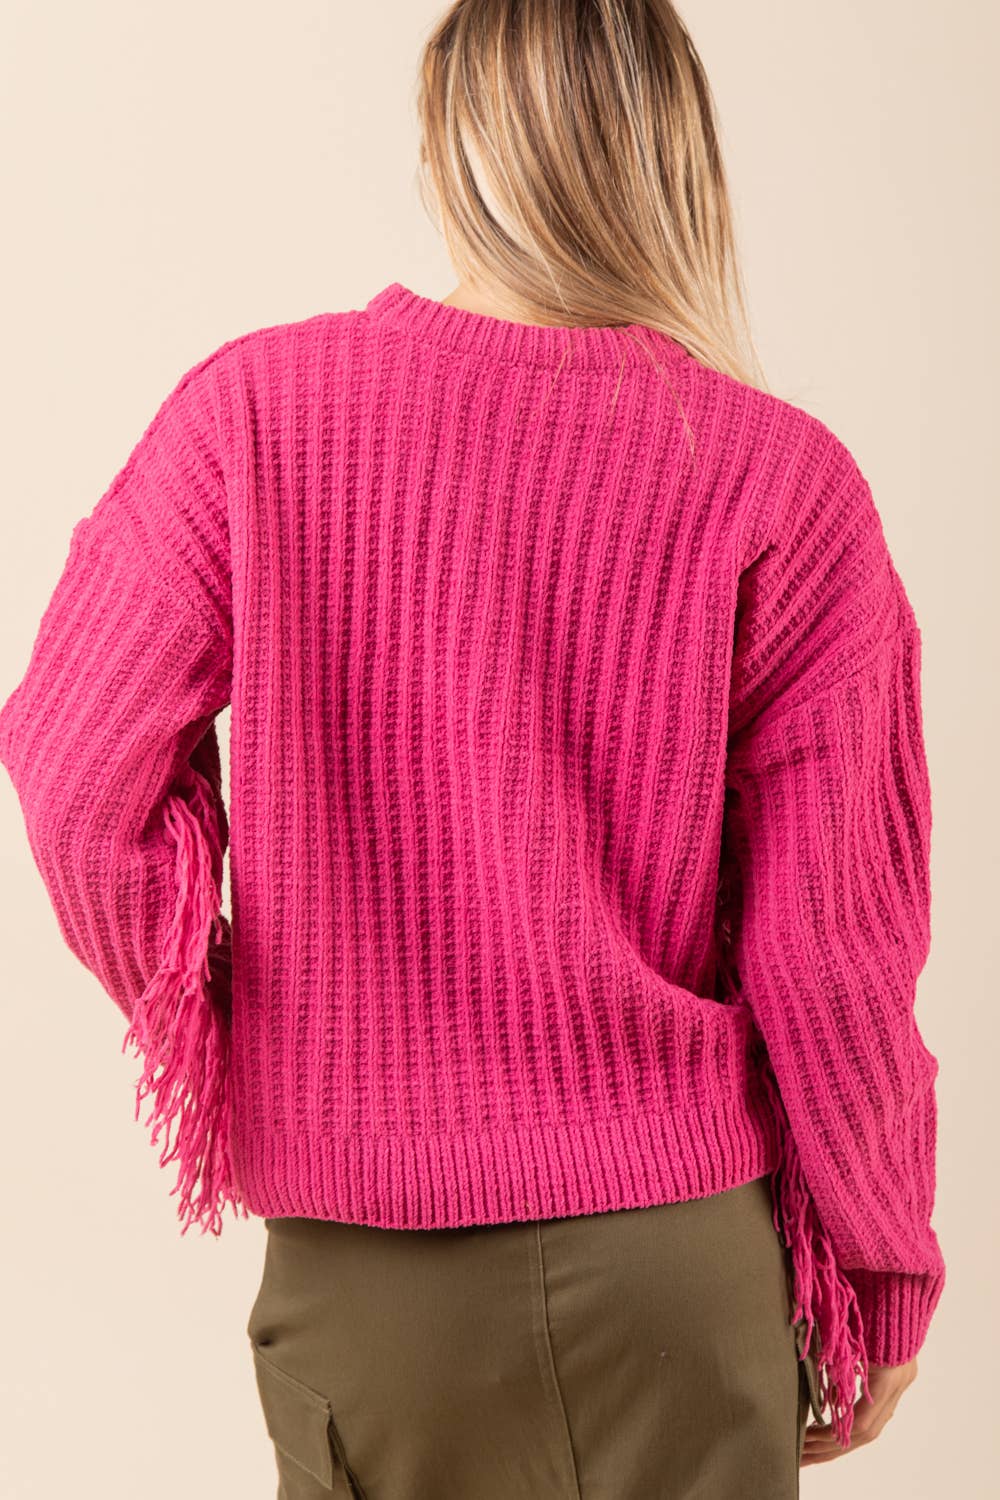 Fringe Detail Western Sweater Top